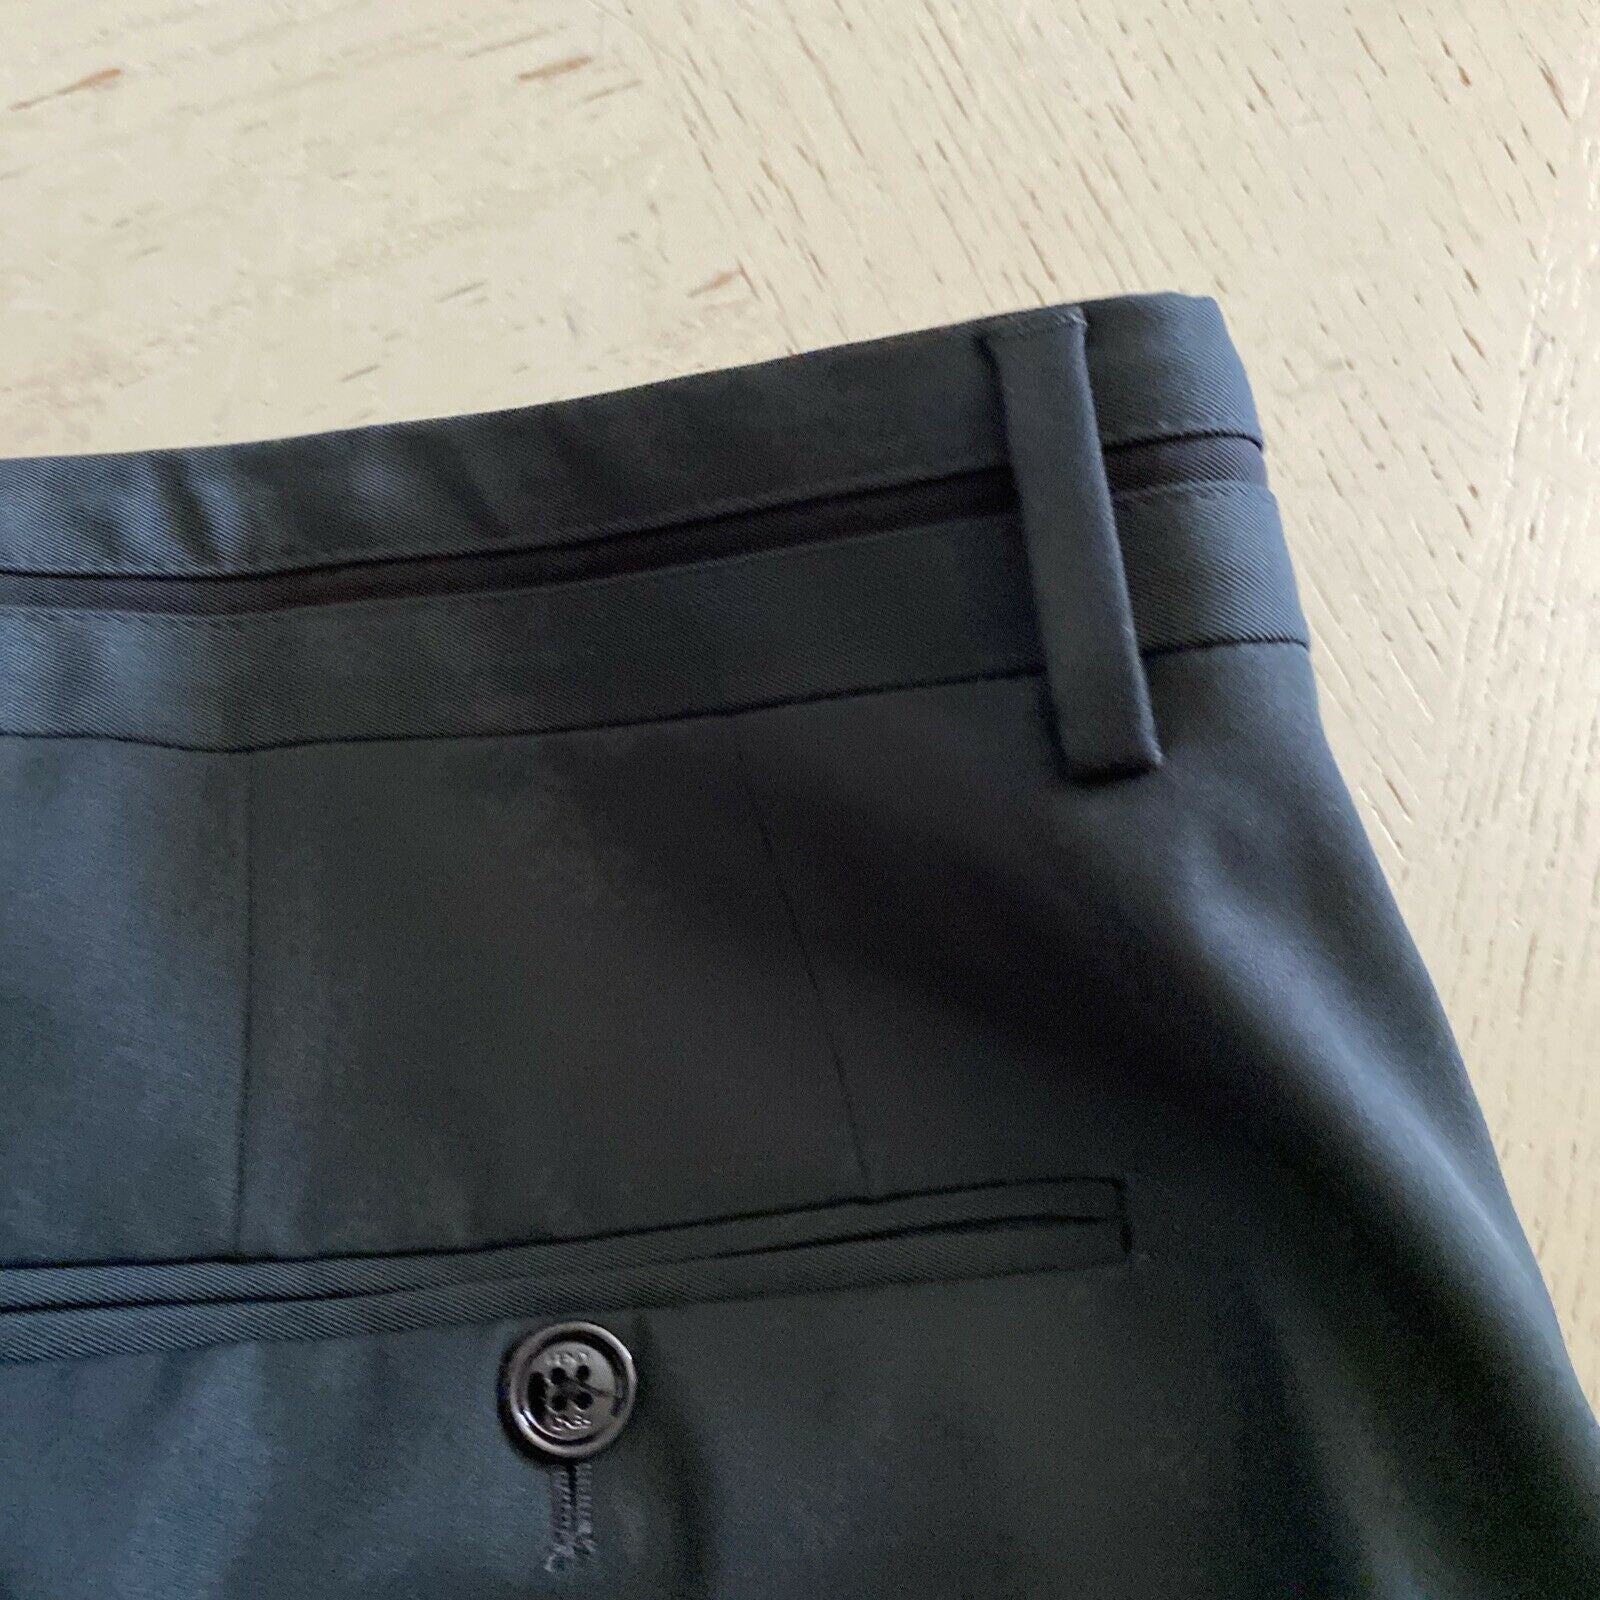 New $750 Fendi Men’s Dress Pants DK Green/Gray 34 US ( 50 Eu ) Italy